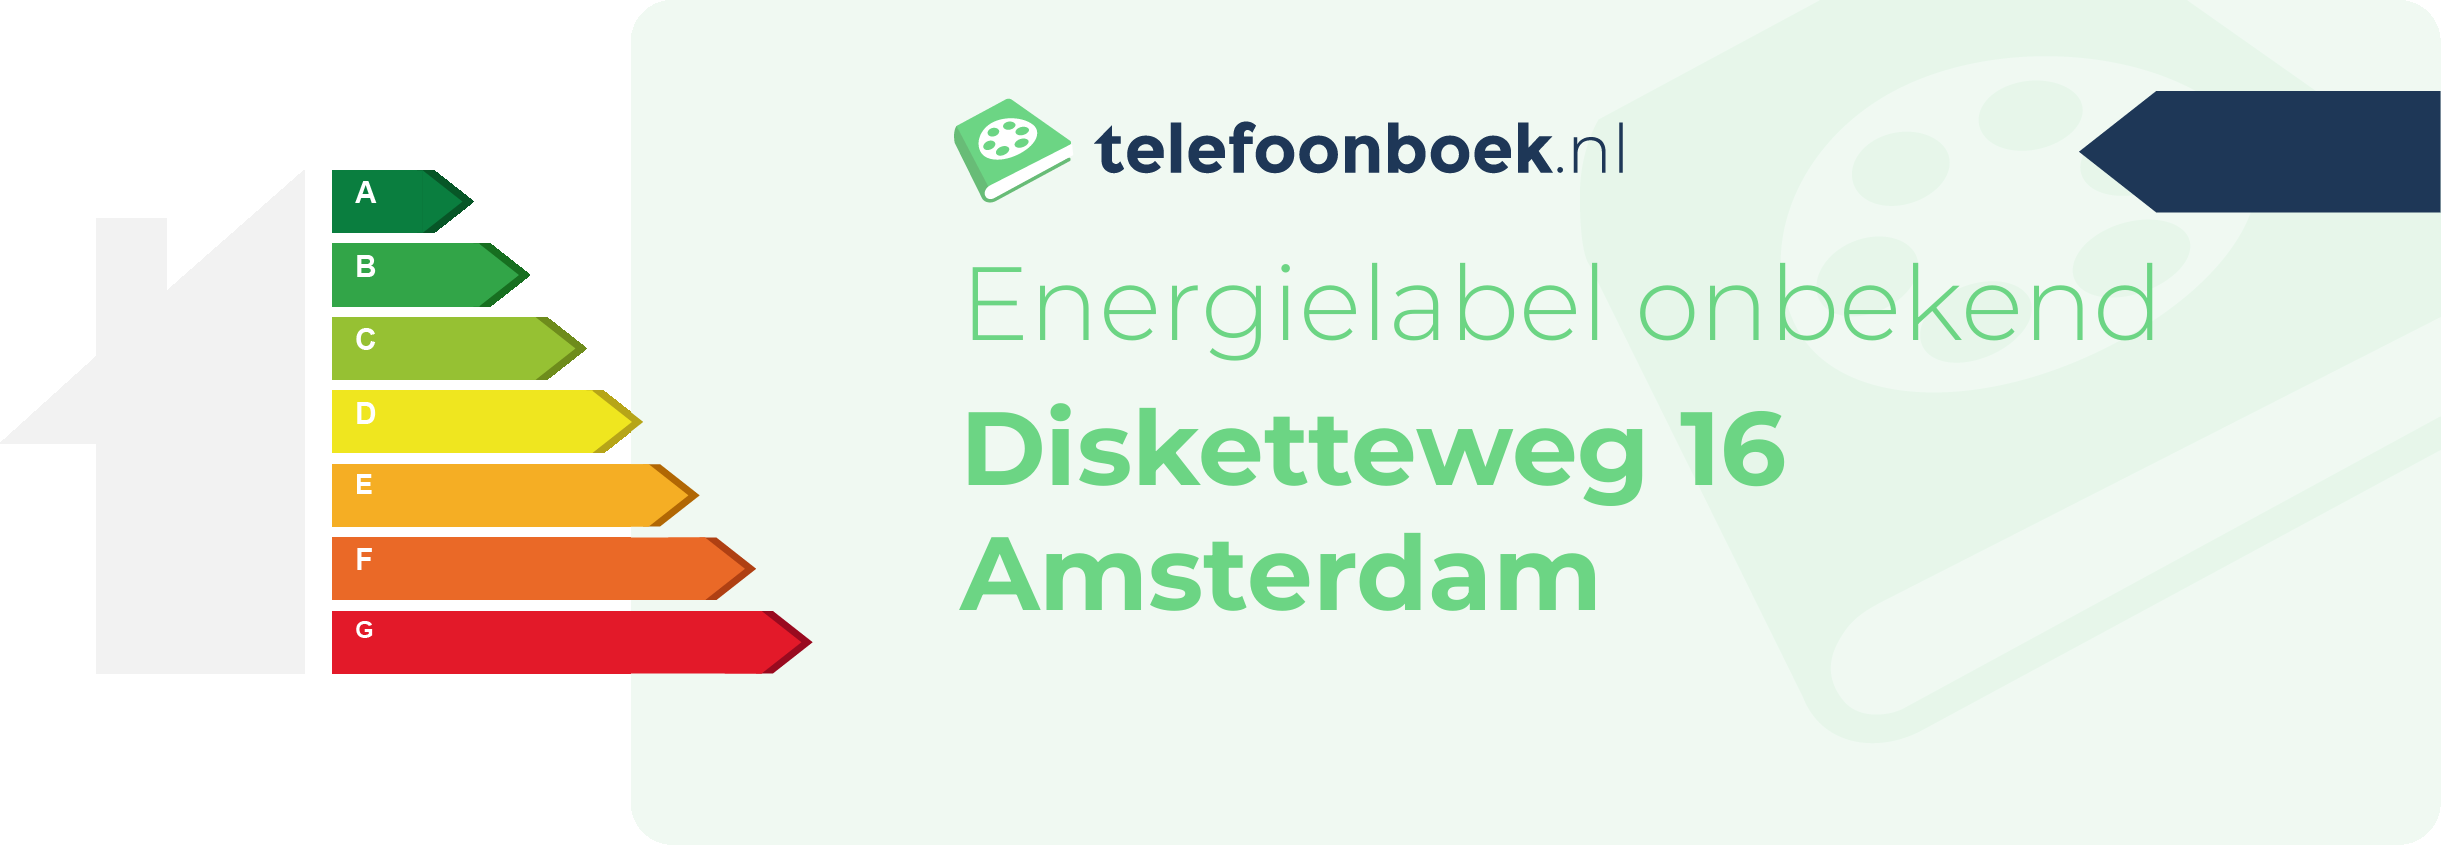 Energielabel Disketteweg 16 Amsterdam